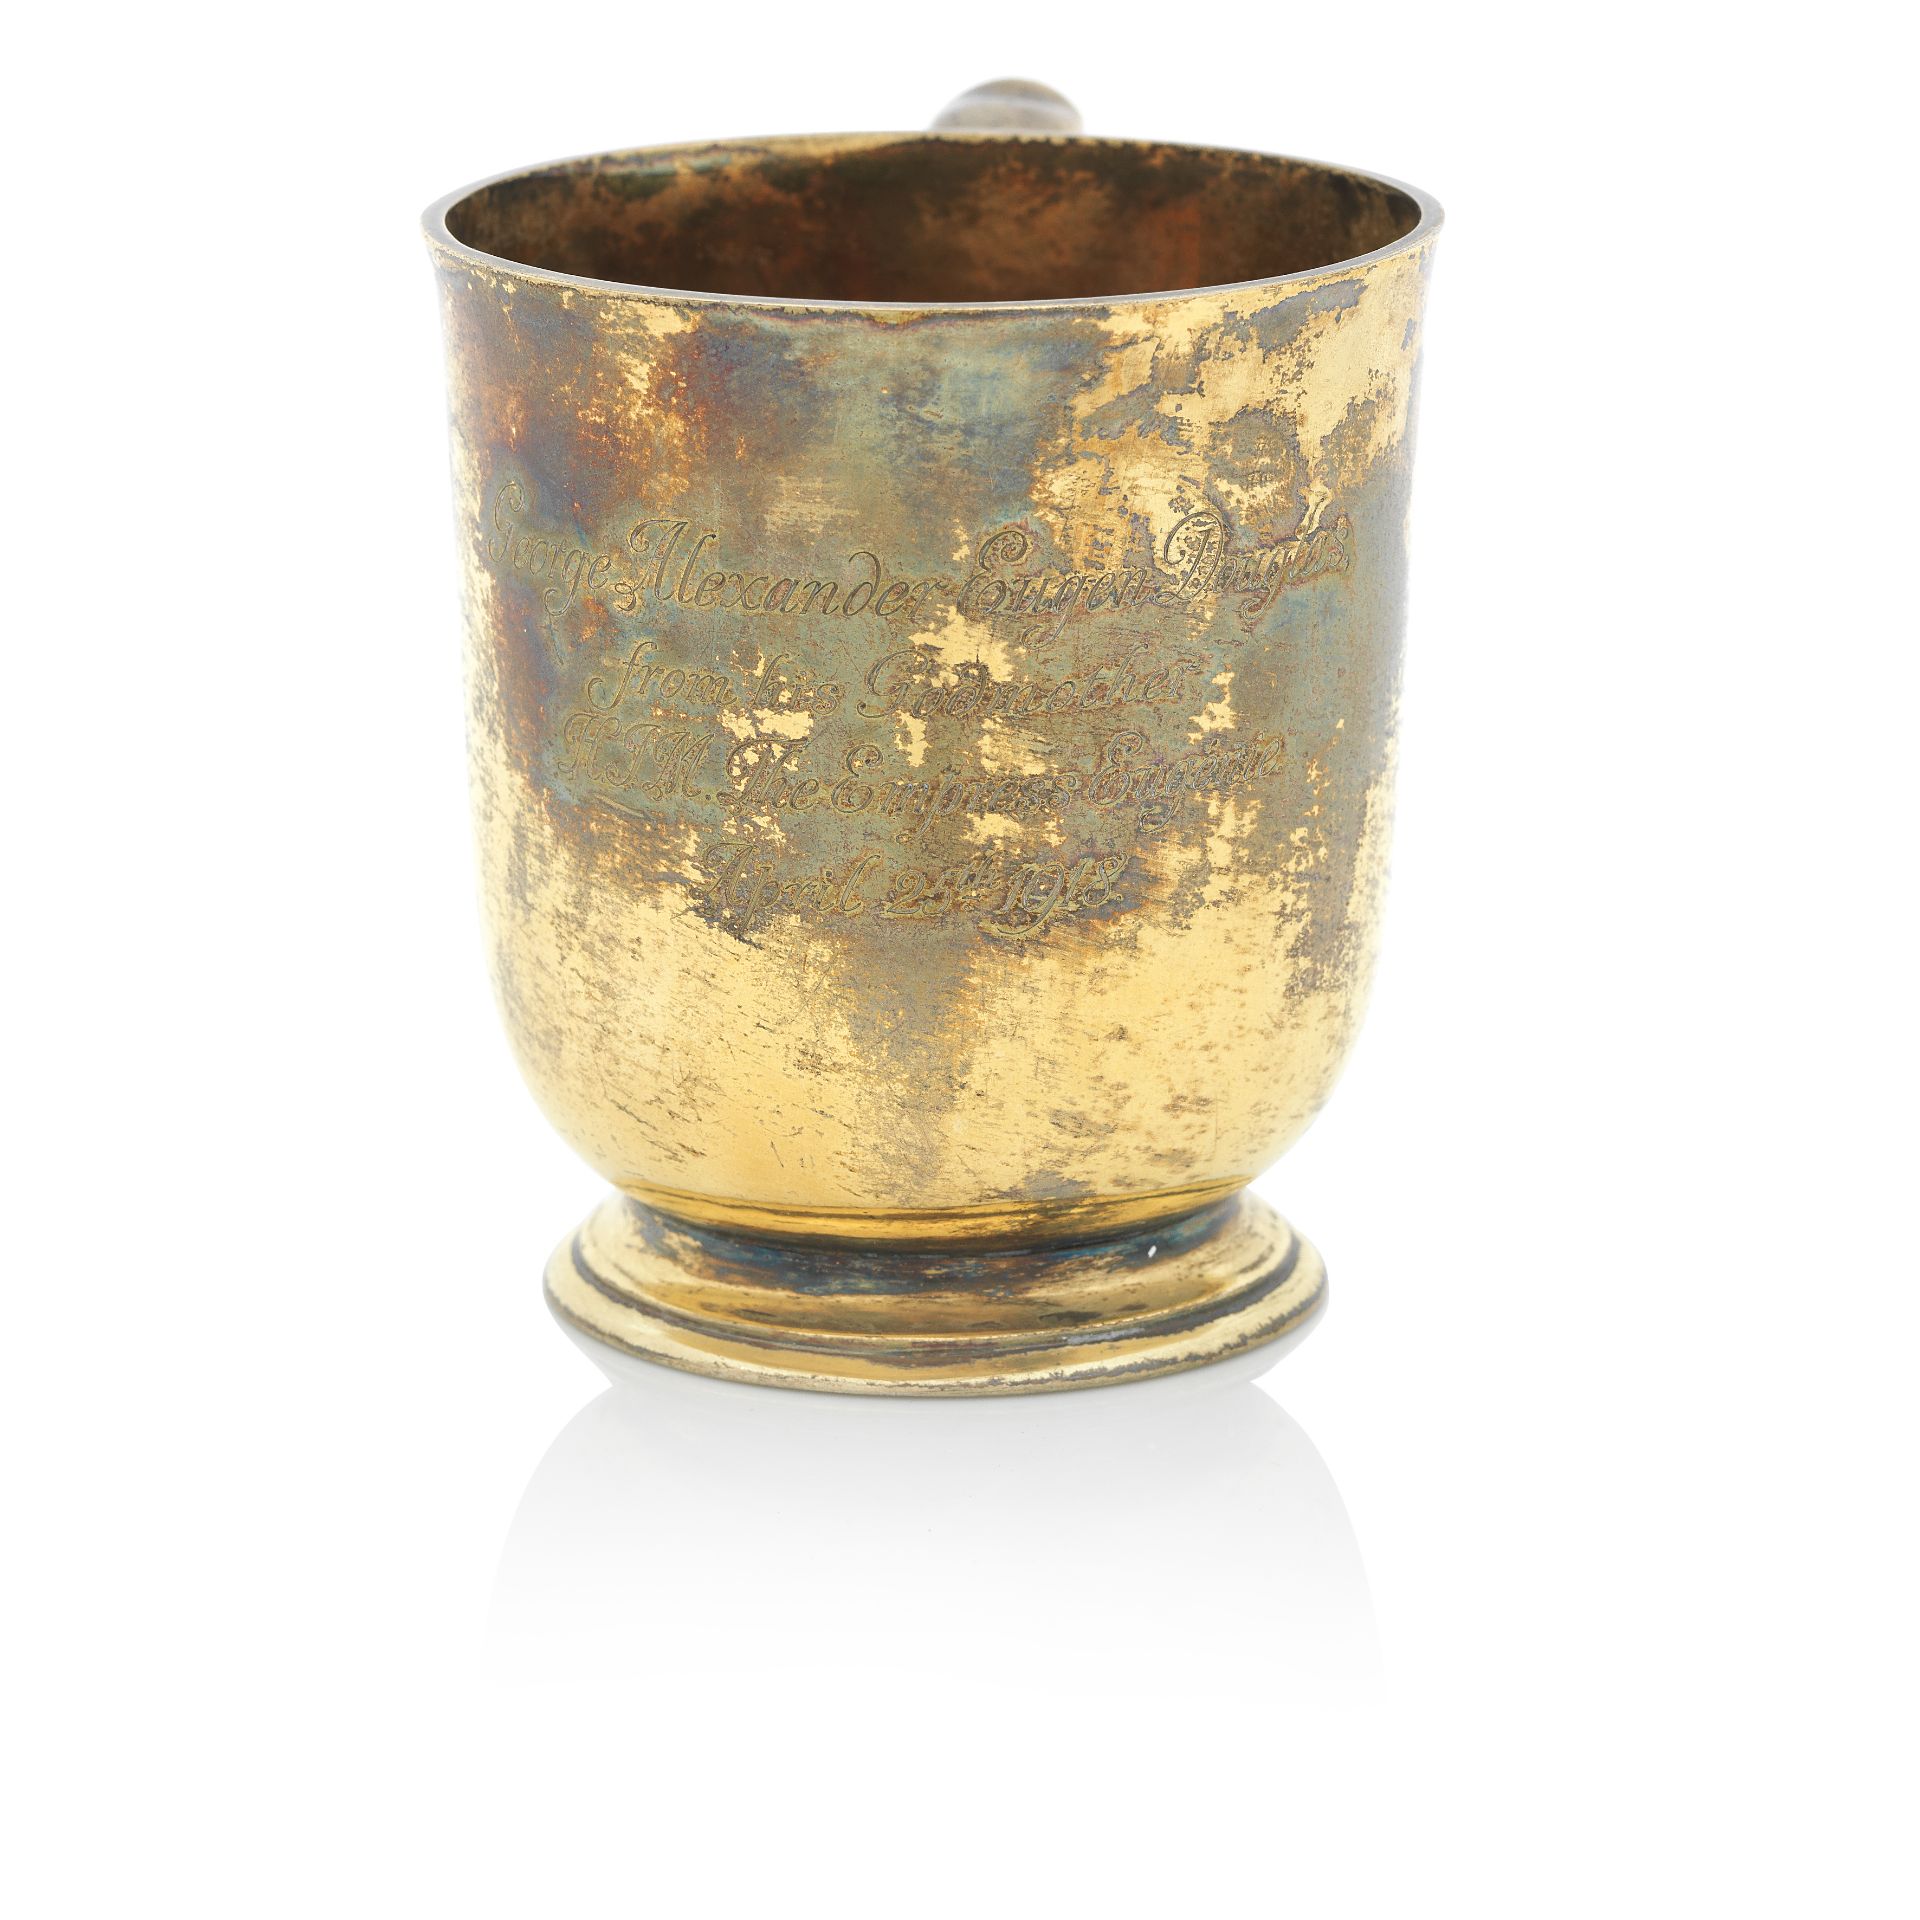 A George VI silver gilt Christening mug by R & S Garrard & Co (Sebastian Henry Garrard), Lond